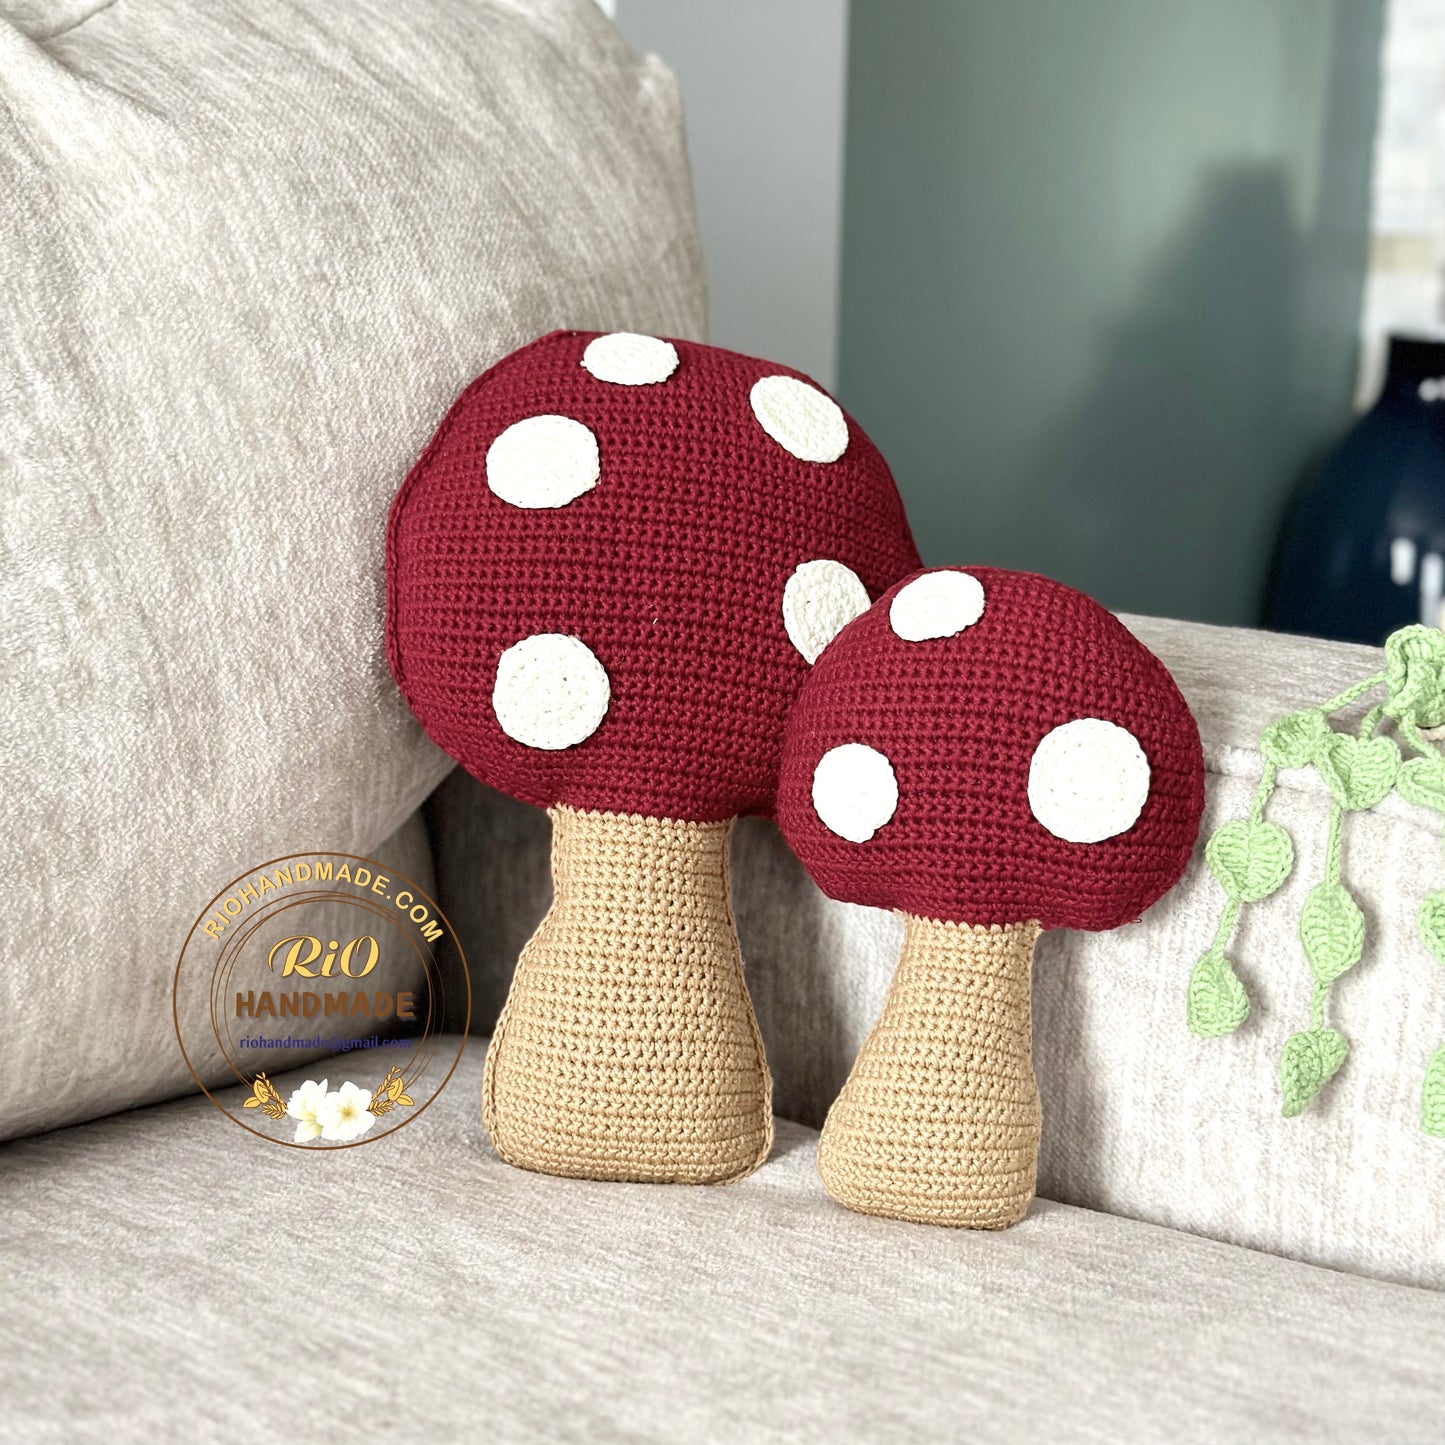 Handmade cotton yarn mushroom pillow crochet, home decor, amigurumi, decorative mushroom throw pillow